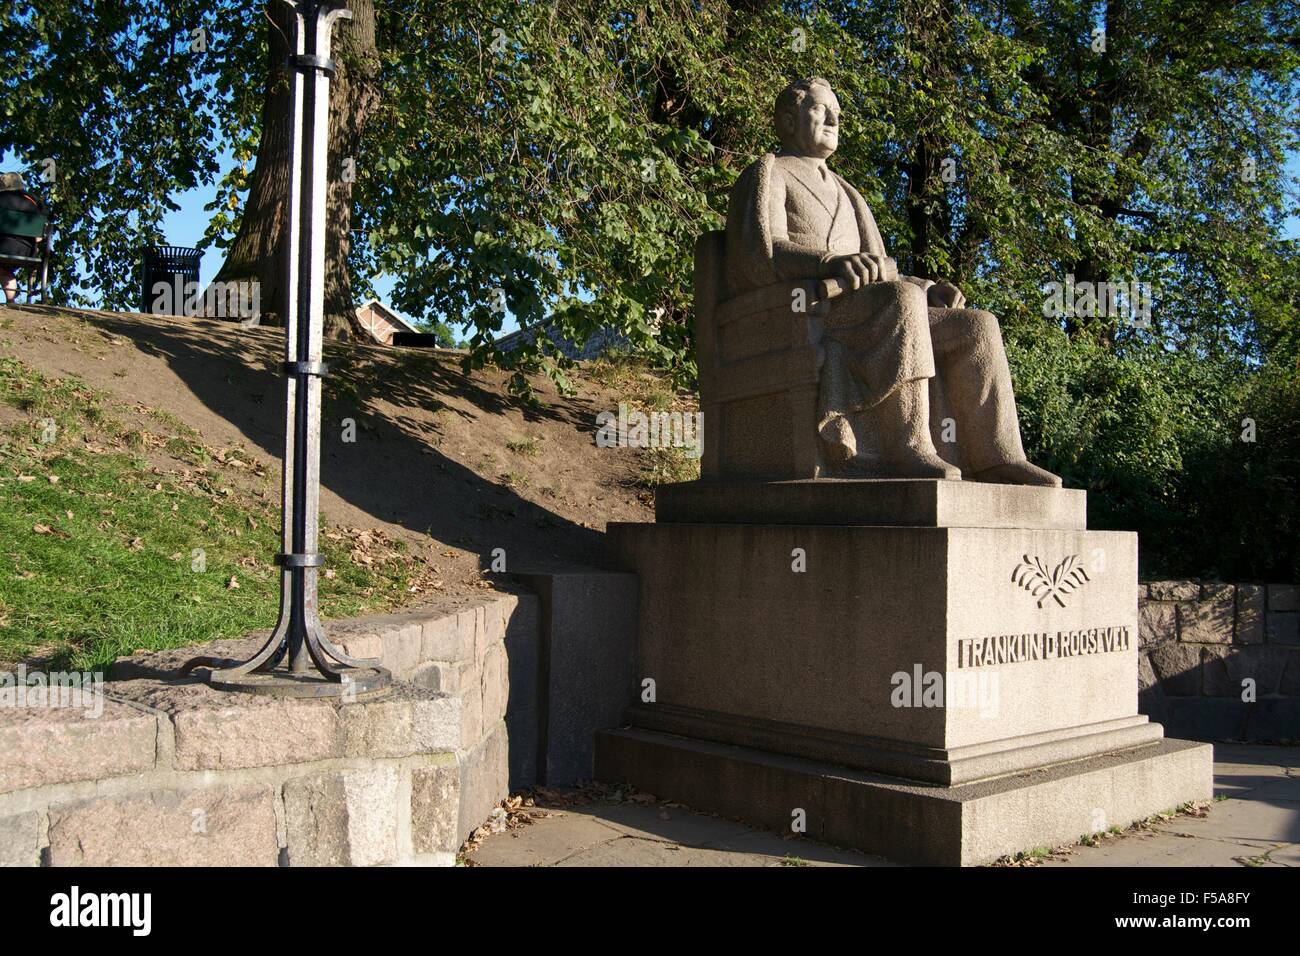 Franklin Roosevelt statue monument Oslo stone art Stock Photo